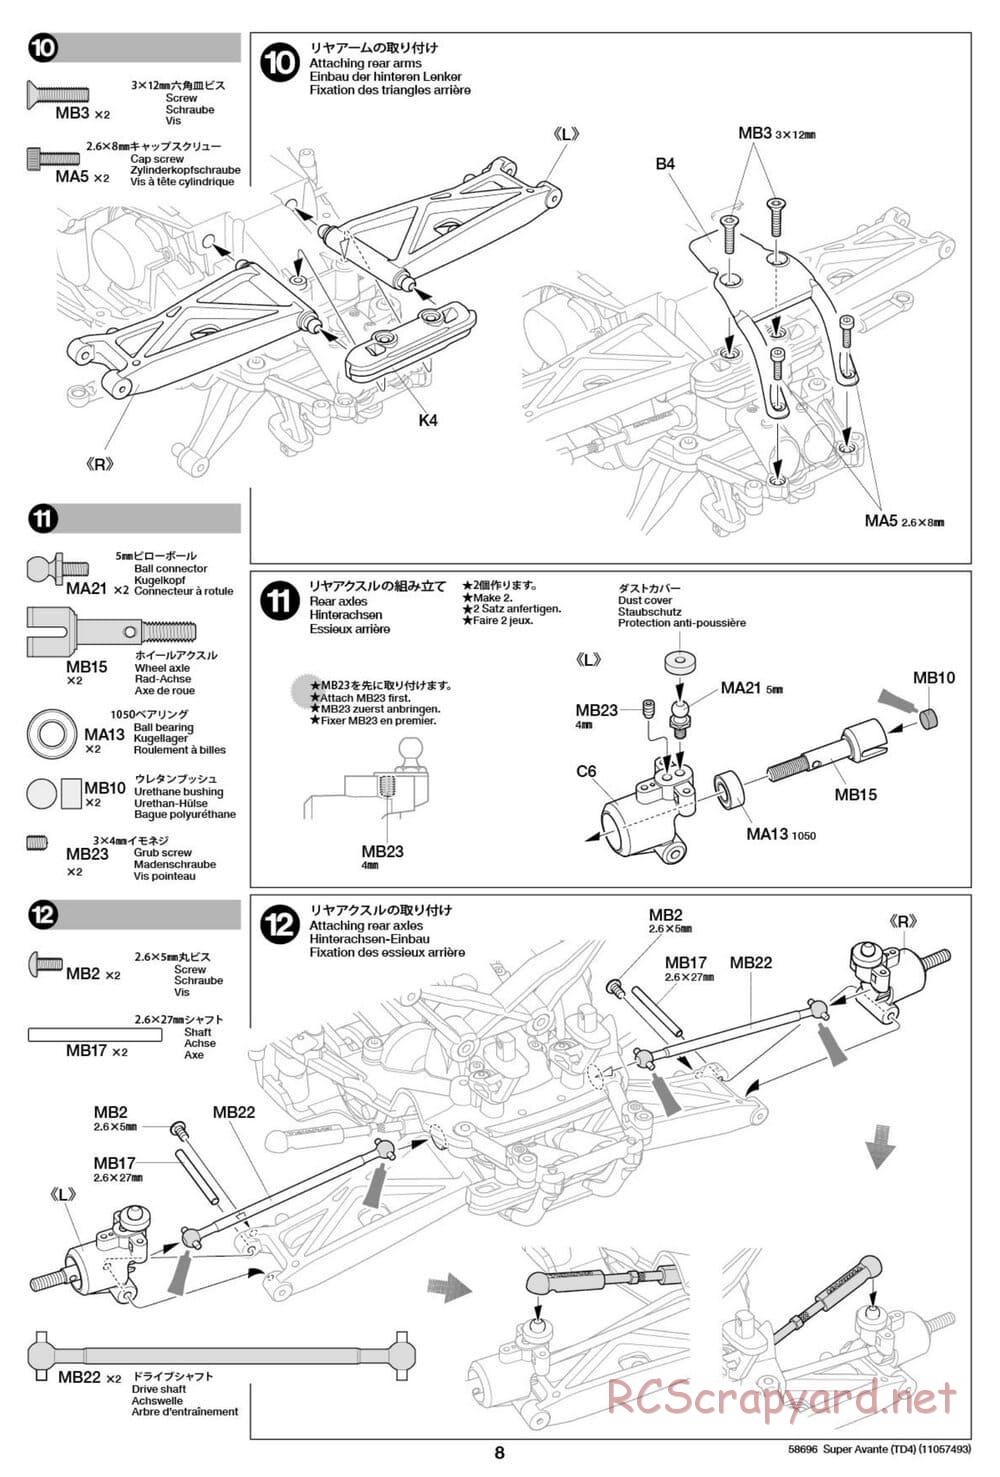 Tamiya - Super Avante - TD4 Chassis - Manual - Page 9